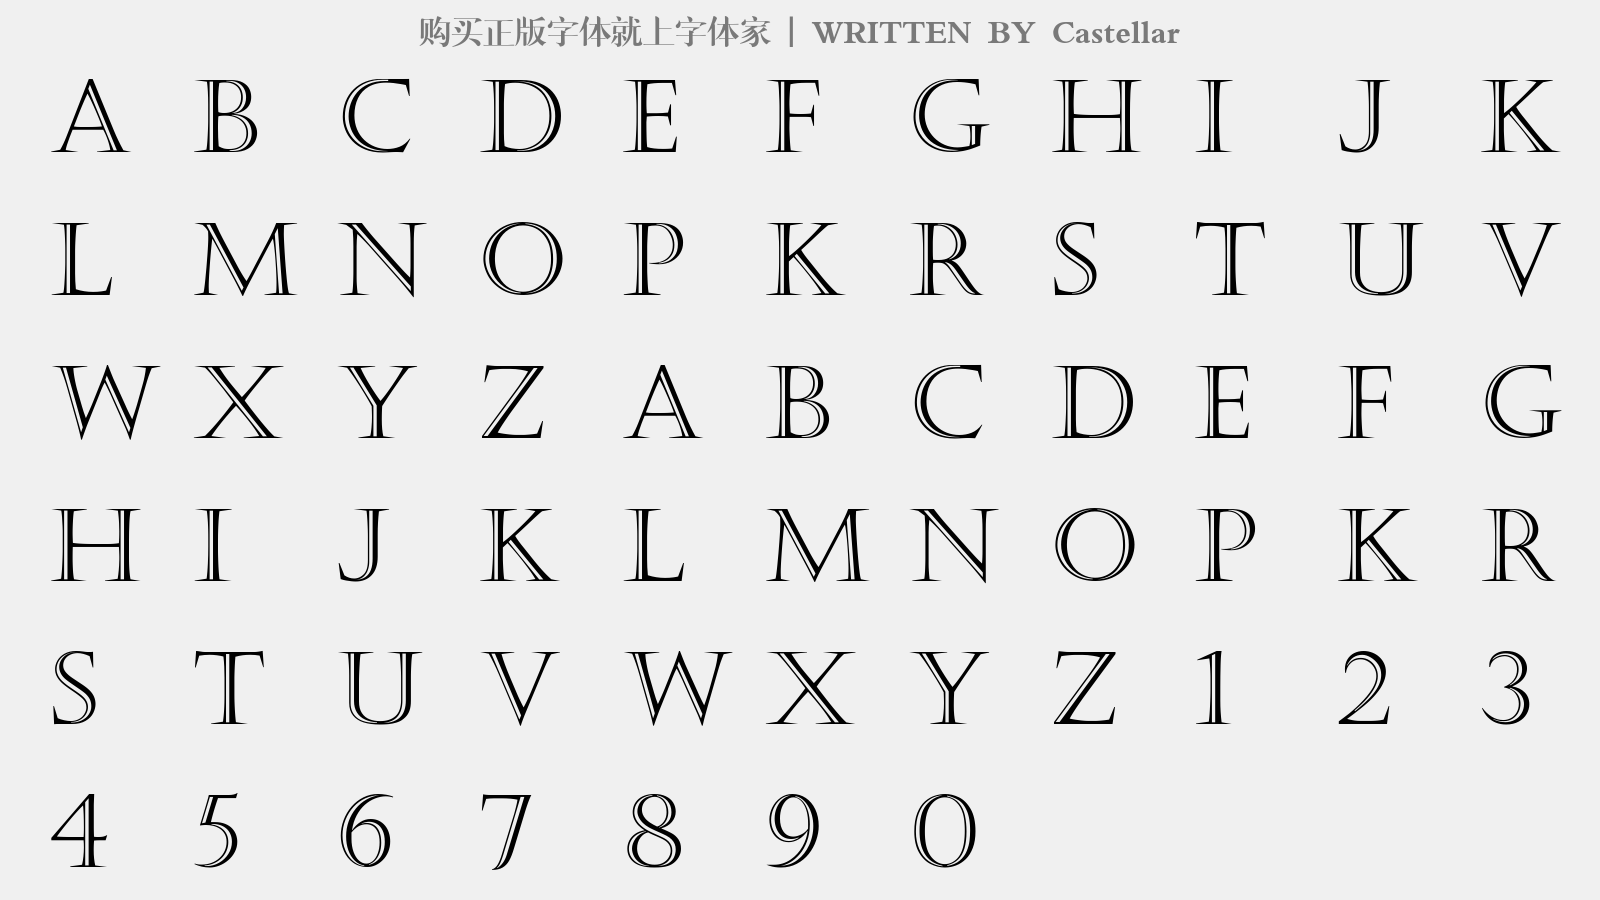 Castellar - 大写字母/小写字母/数字